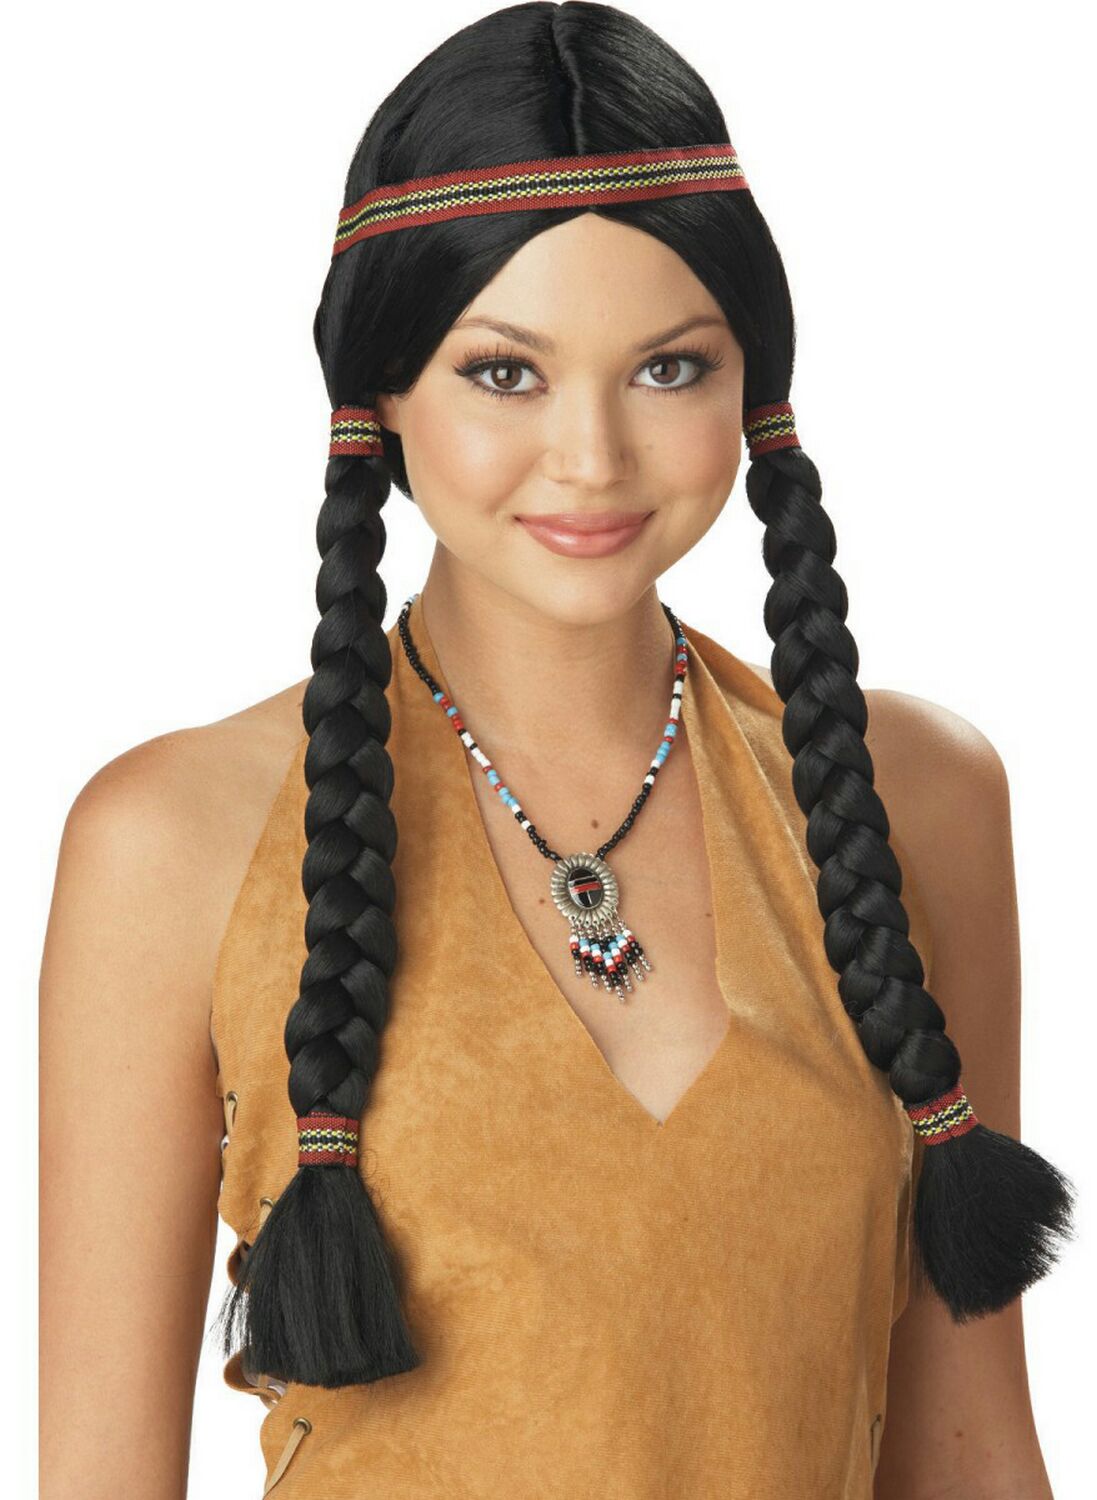 indian-maiden-adult-black